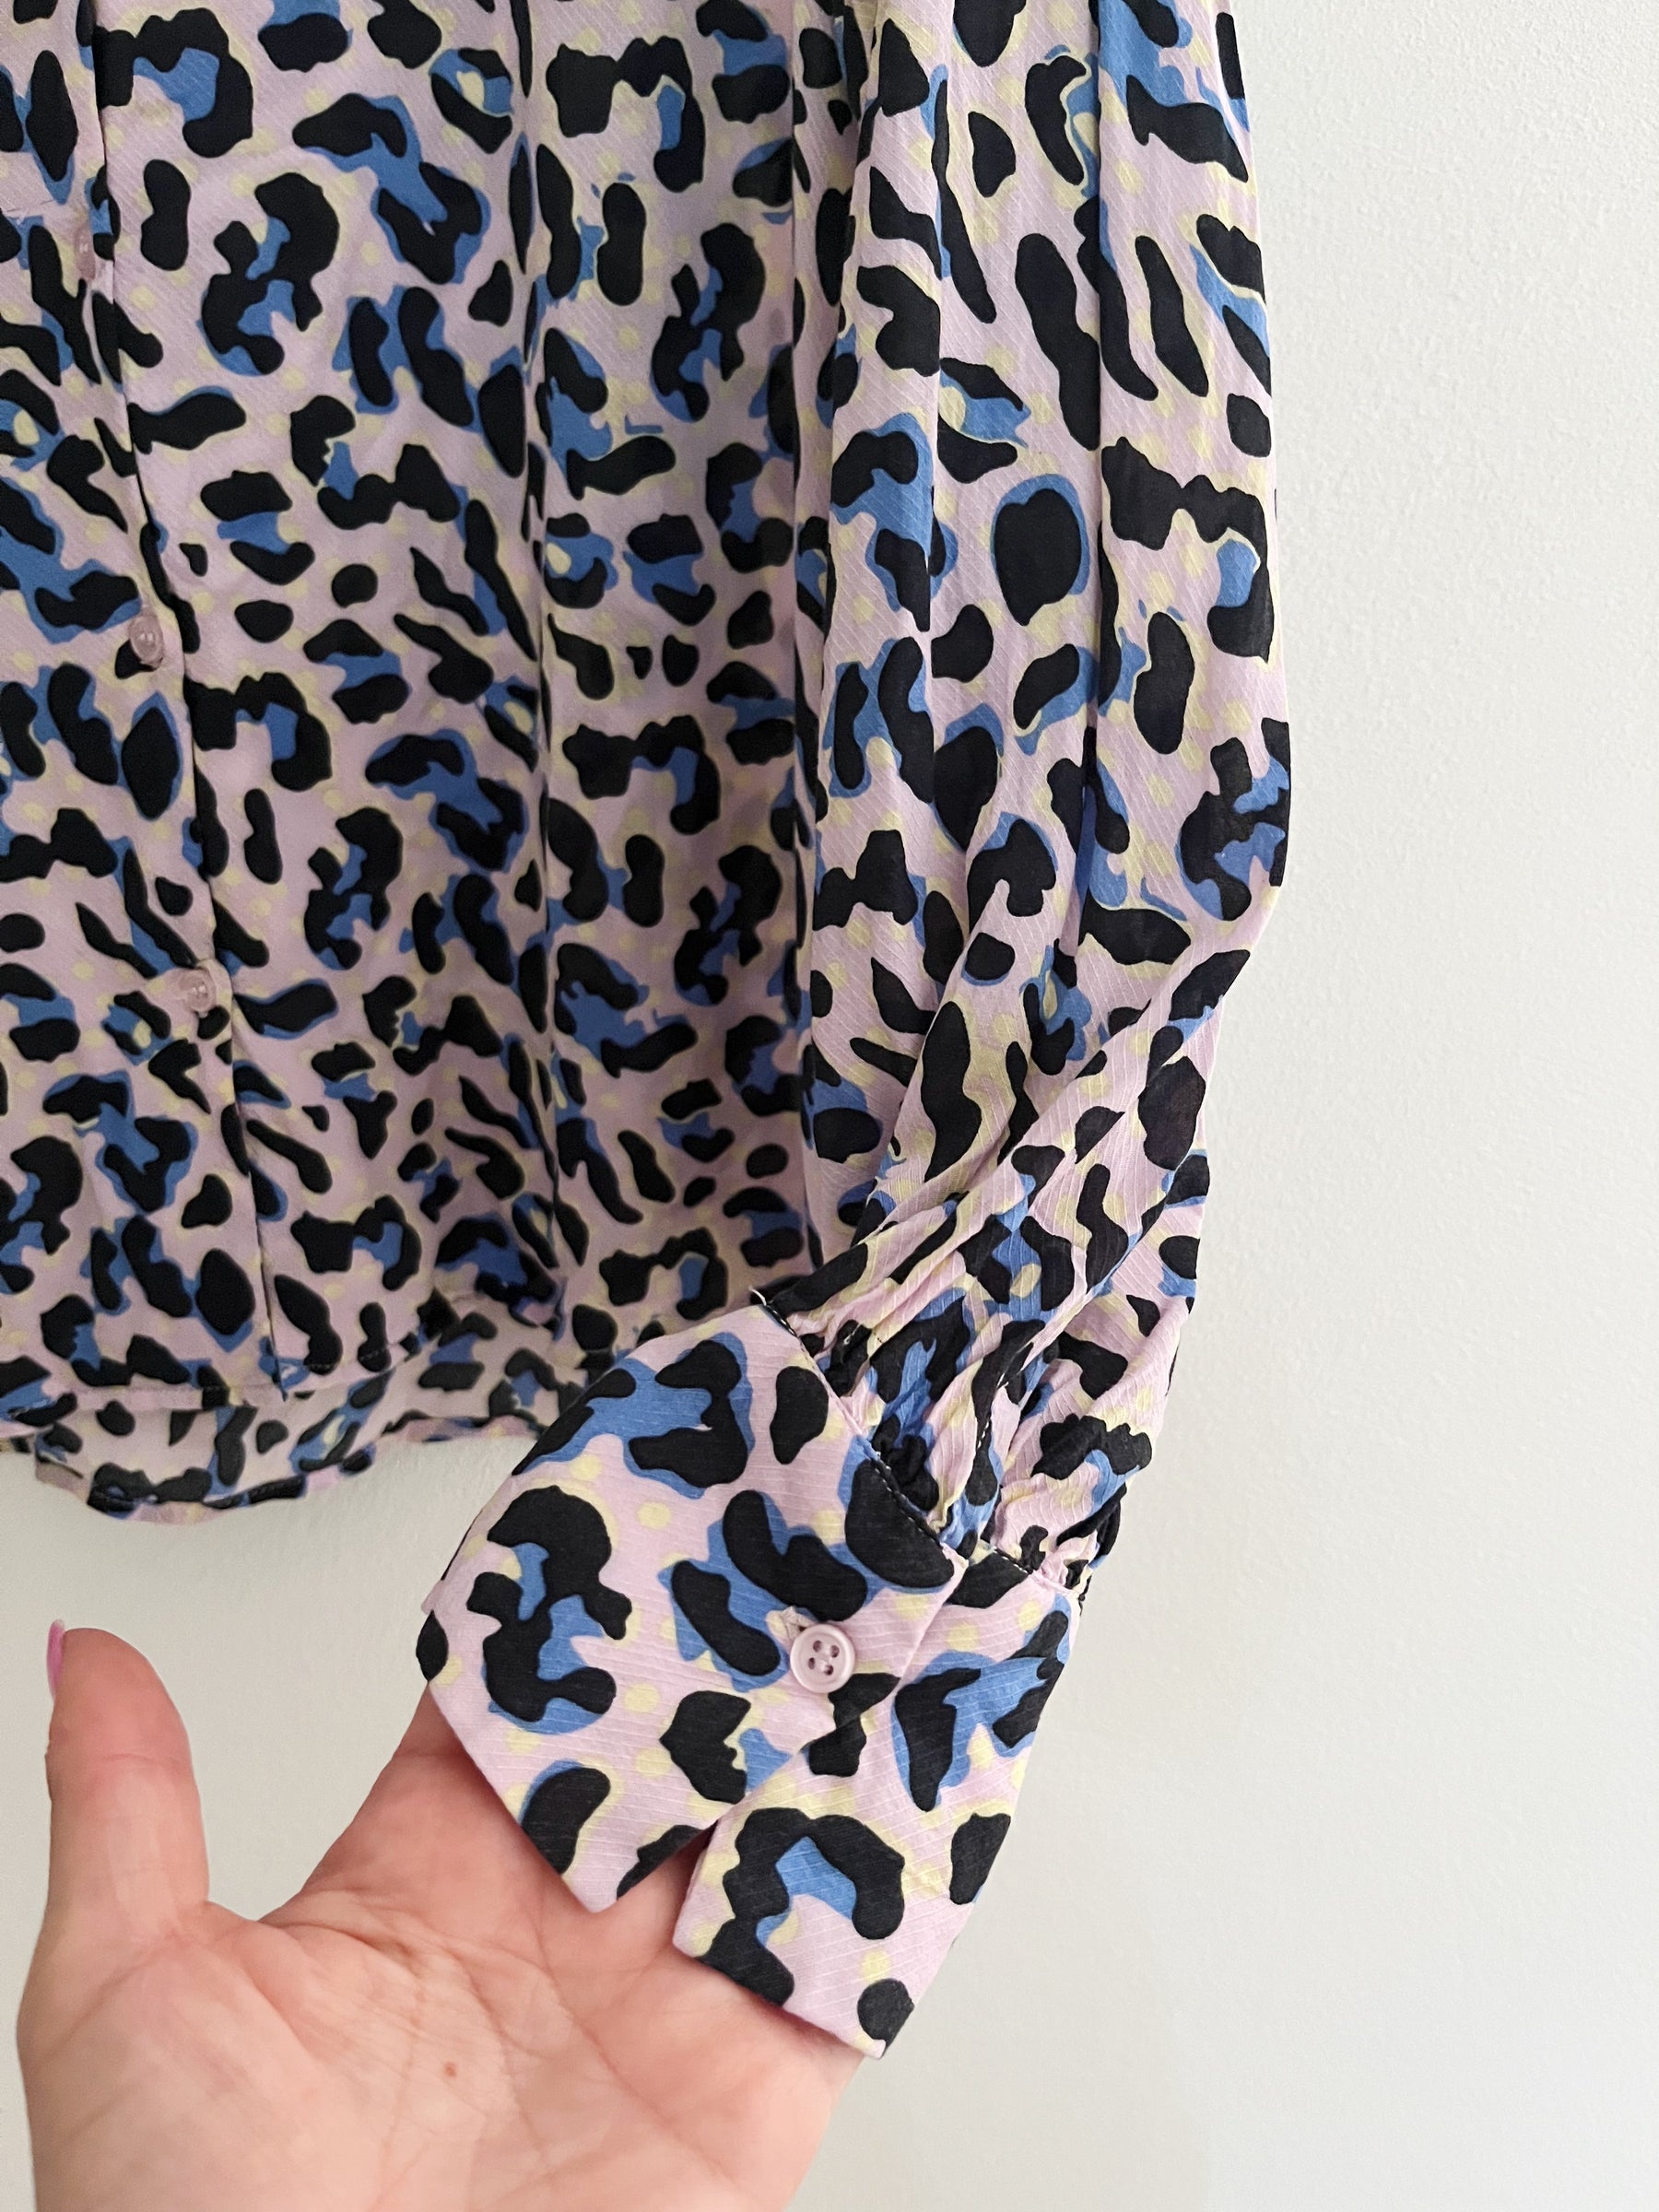 Levete Room leopard bluse